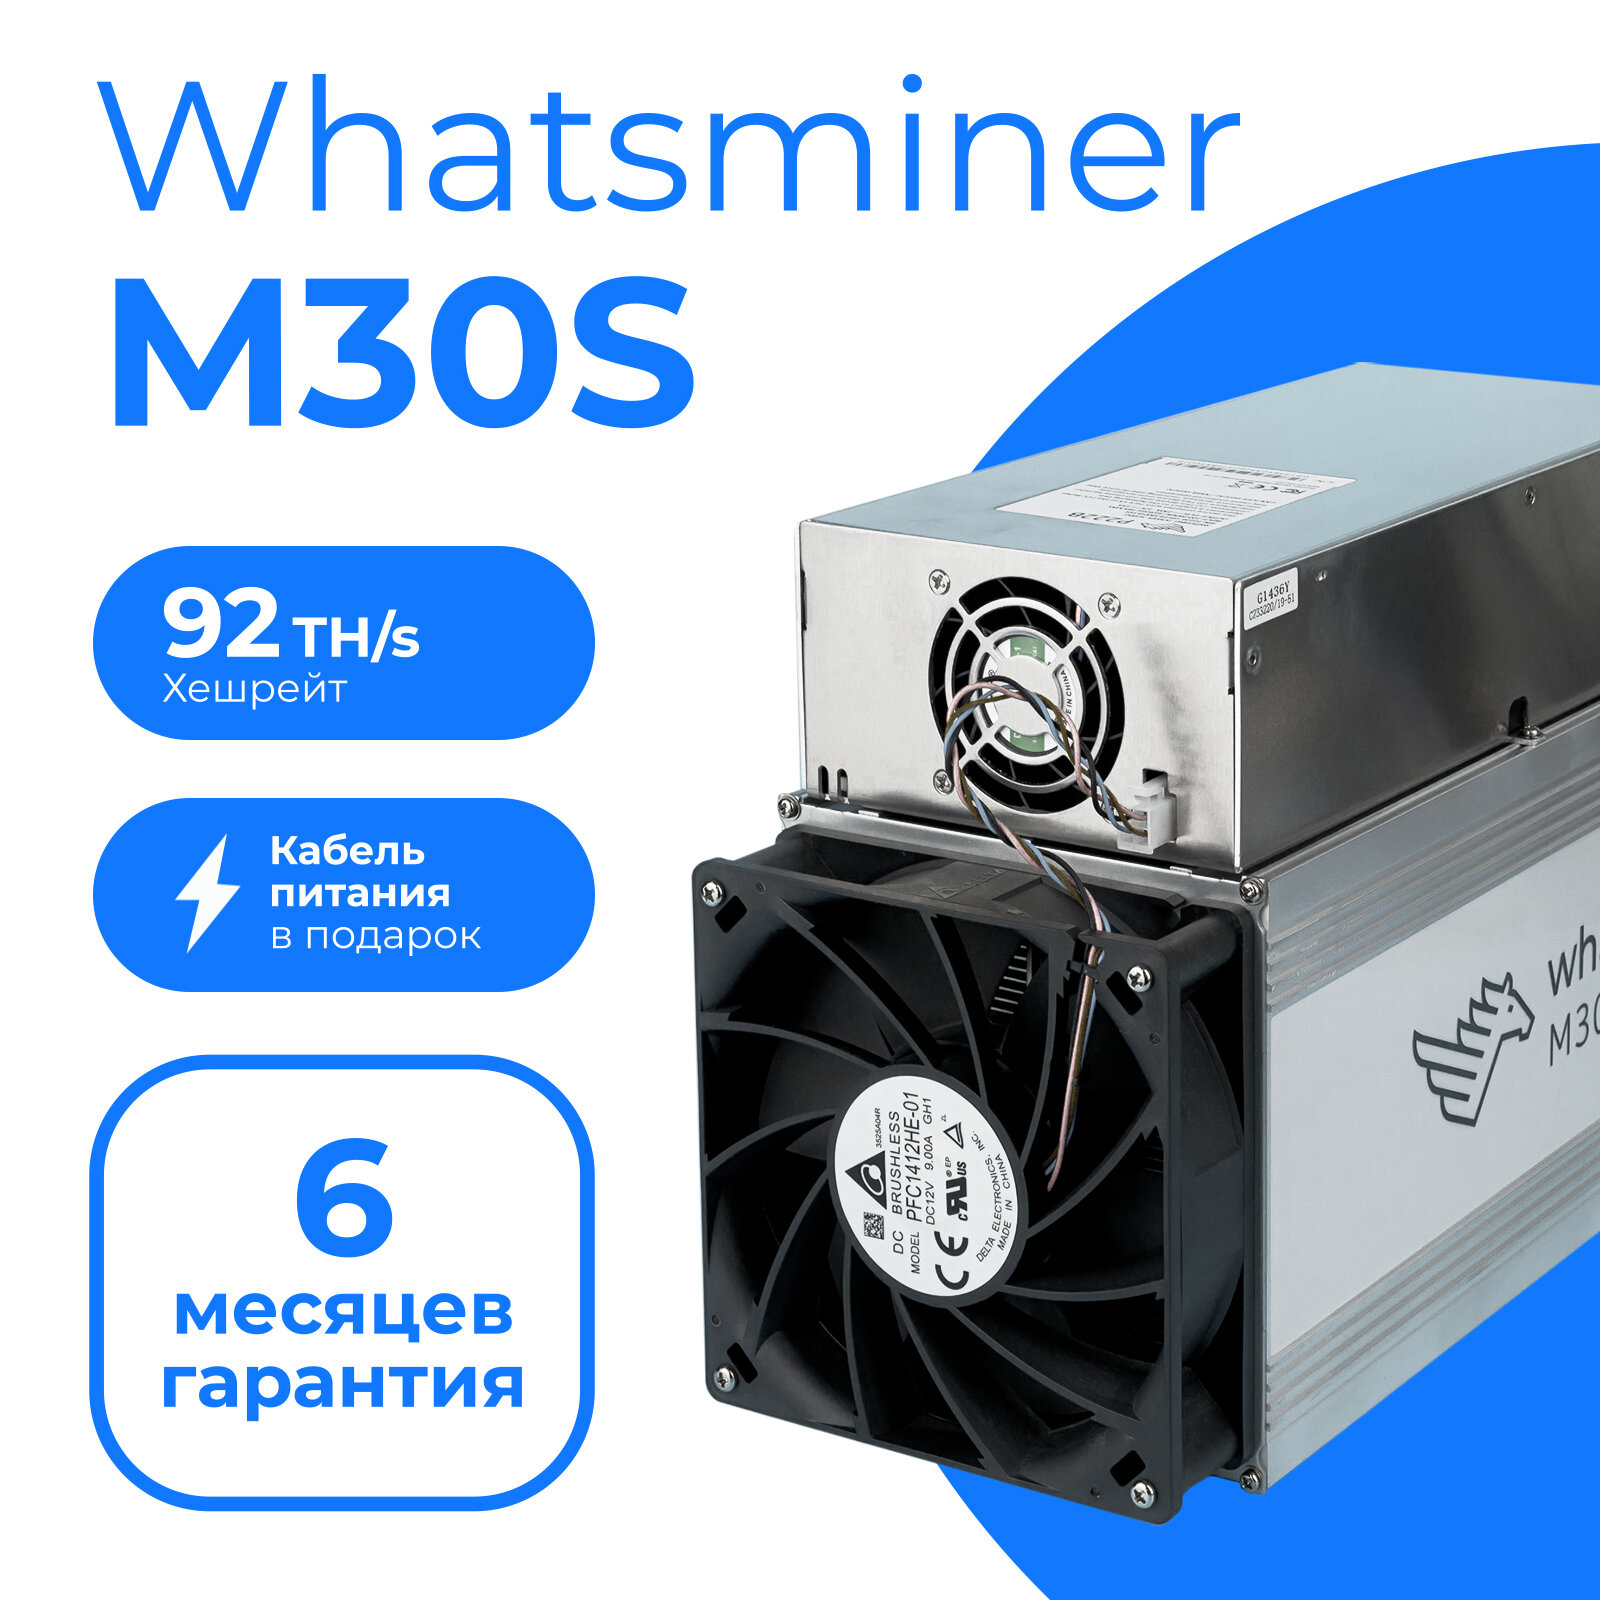 Асик майнер Whatsminer M30S - 92TH/s (36W) + кабель C19 в комплекте